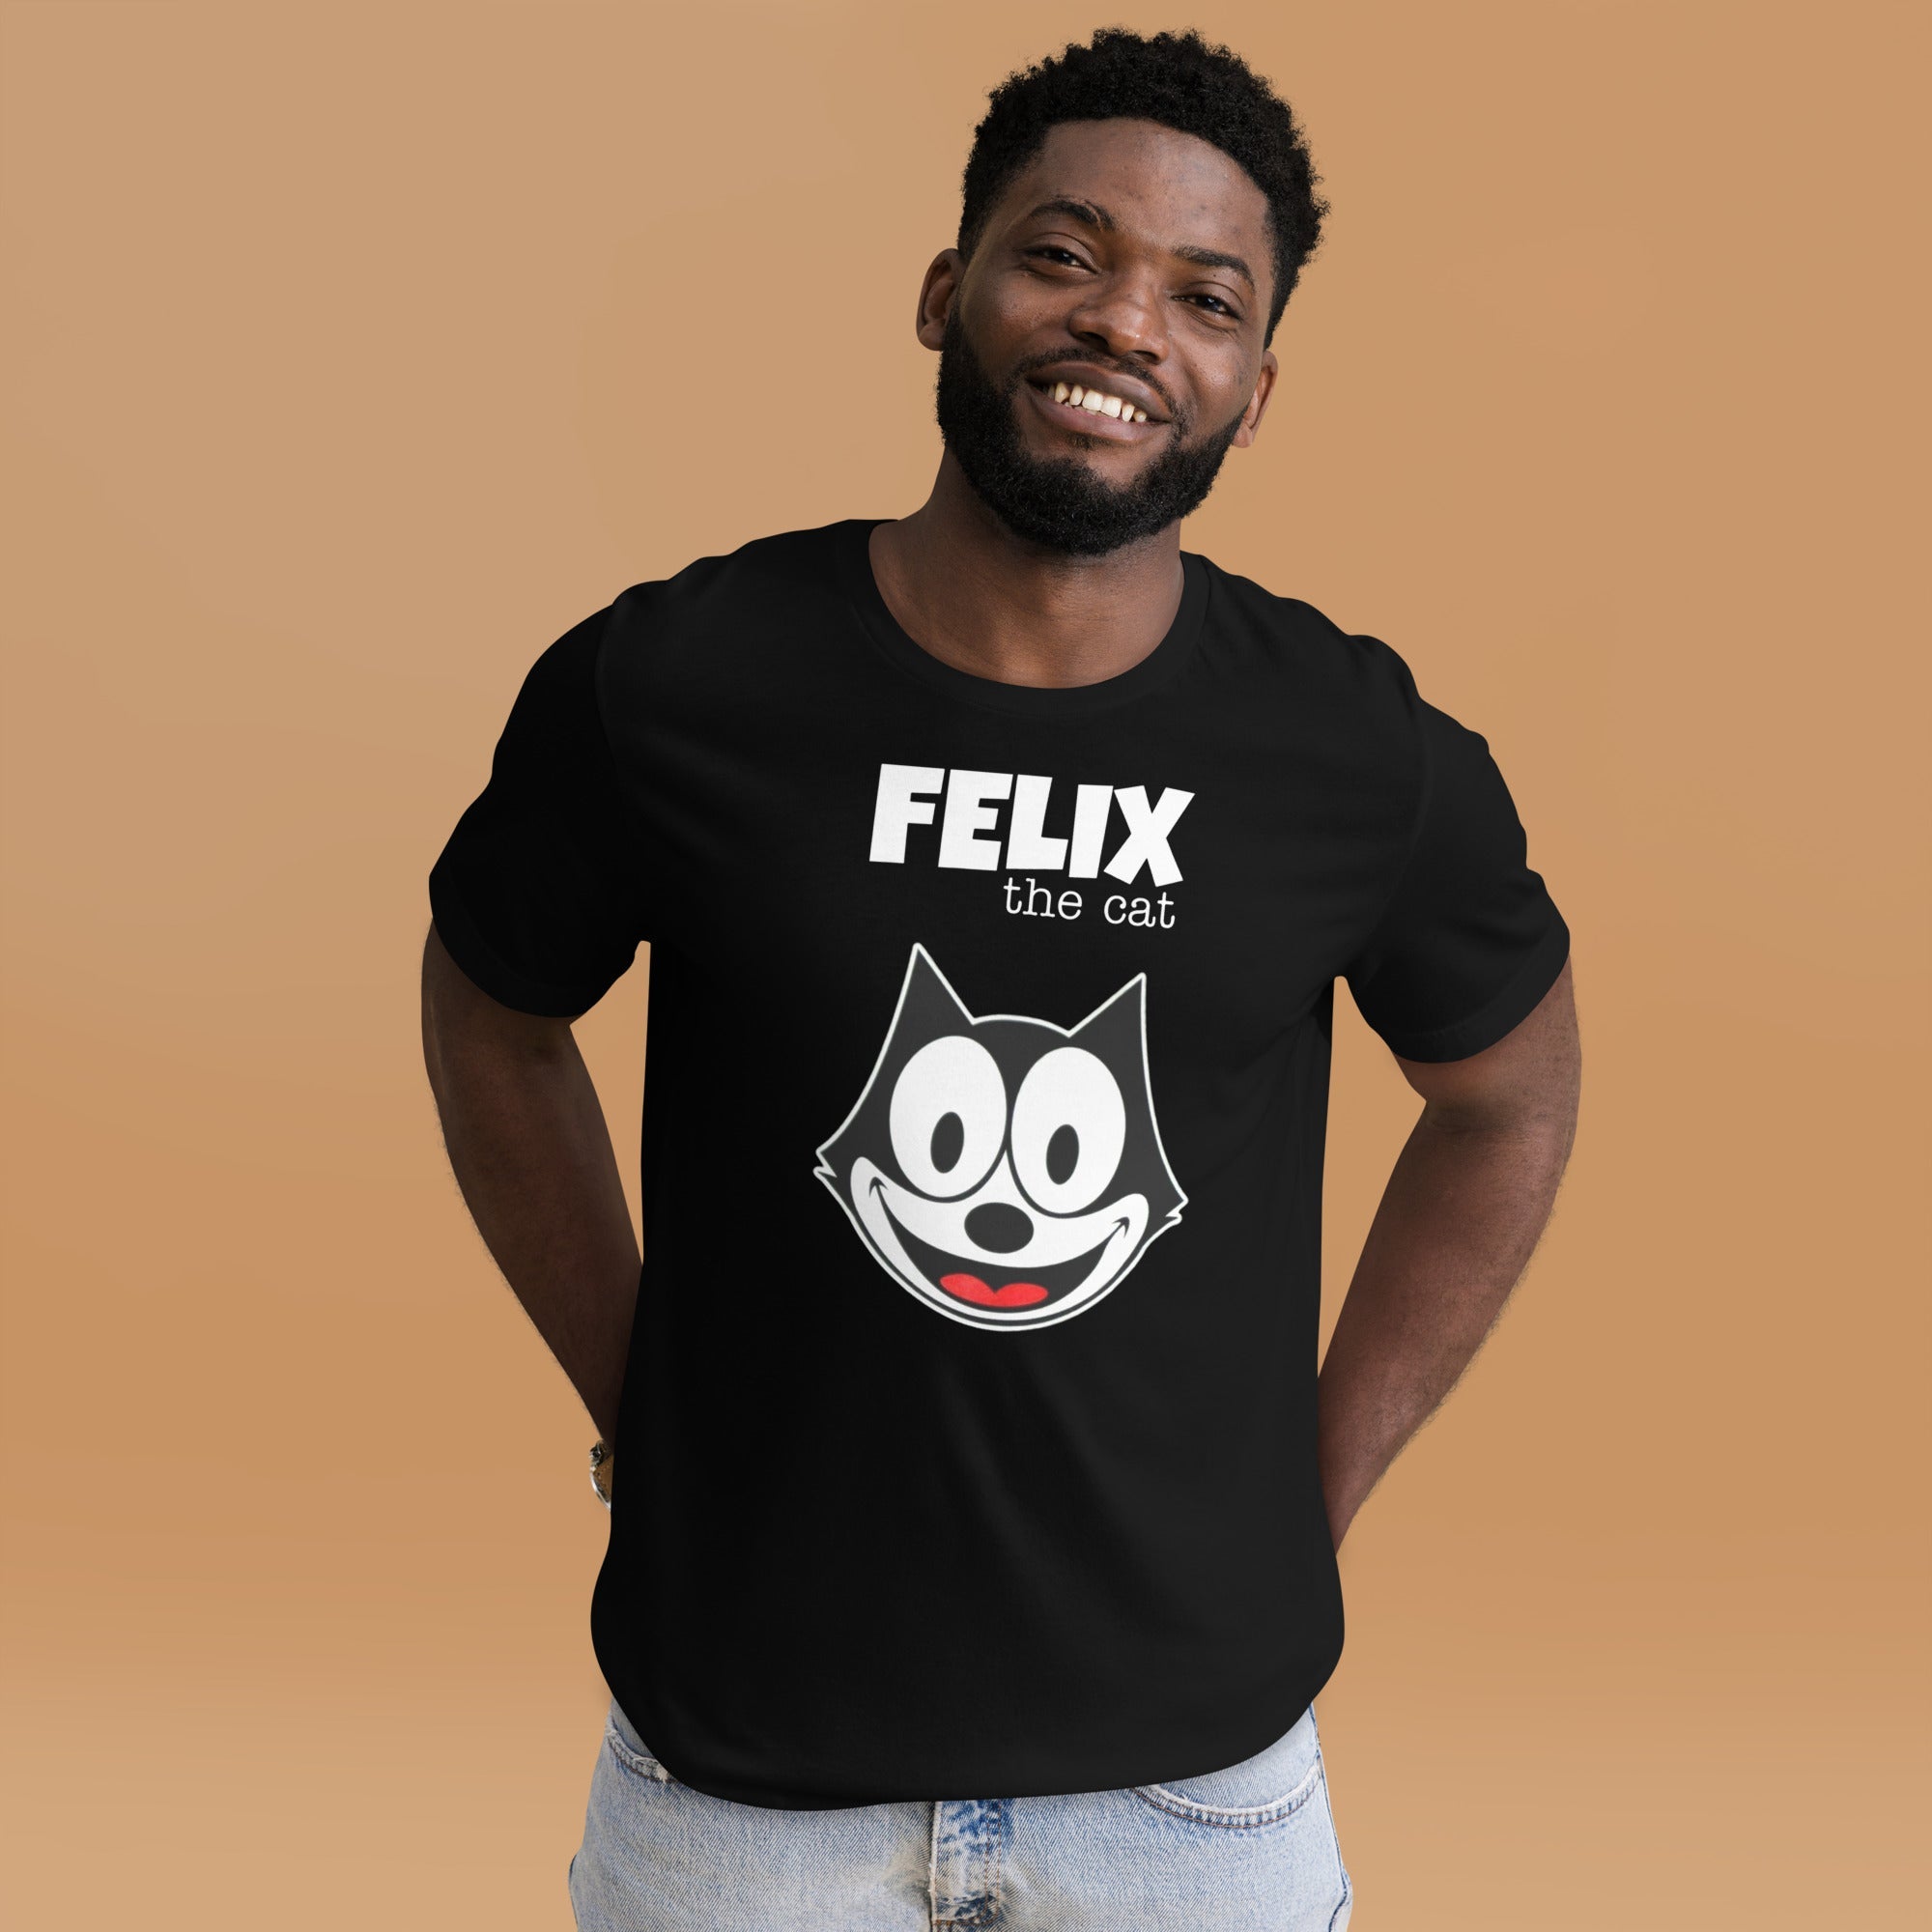 Felix the Cat shirt